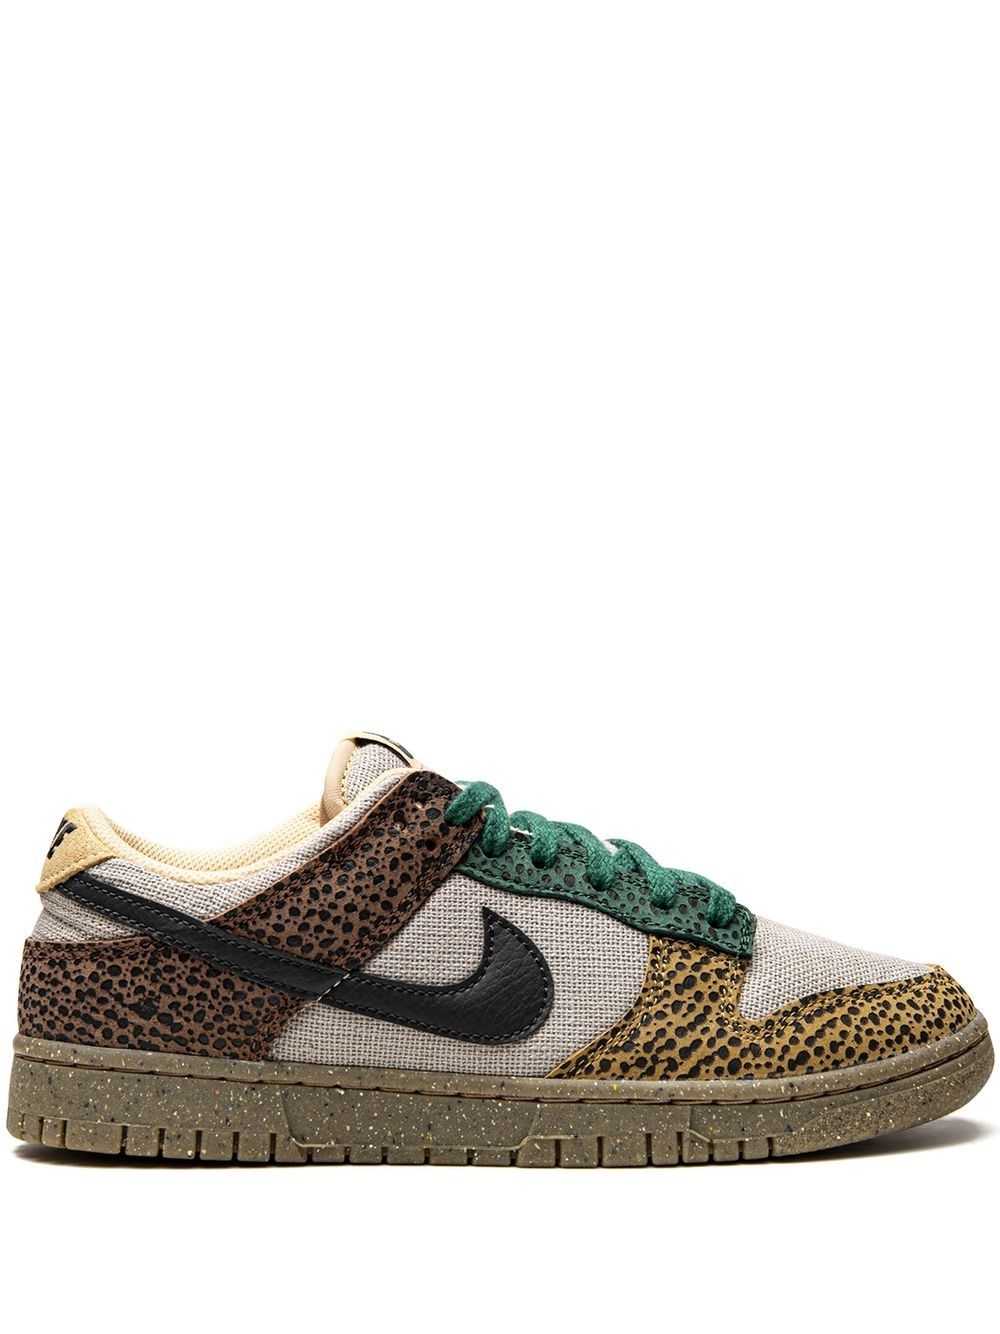 Nike Dunk Low Safari Sneaker In Cacao  Wow/off Noir-gorge Green-golden Moss-gum Lt